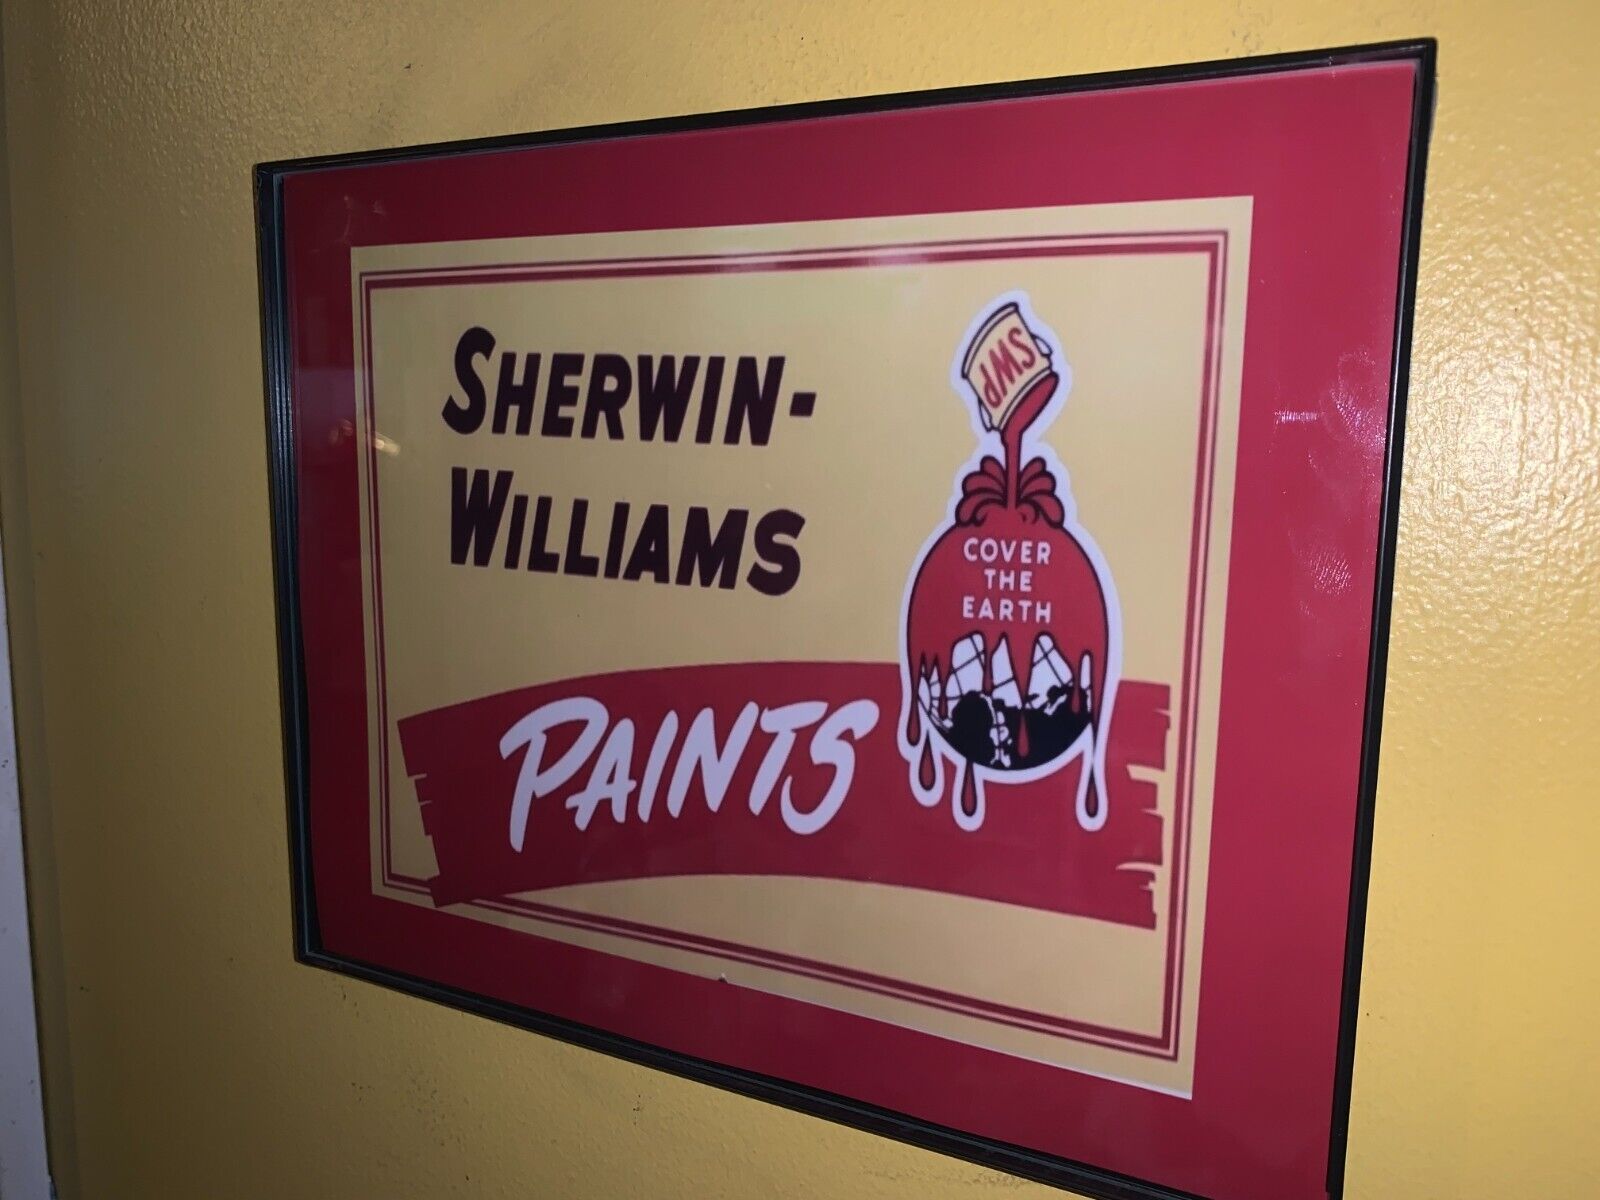 Sherwin Williams Paints Painter Hardware Store garage Man Cave Advertising Sign